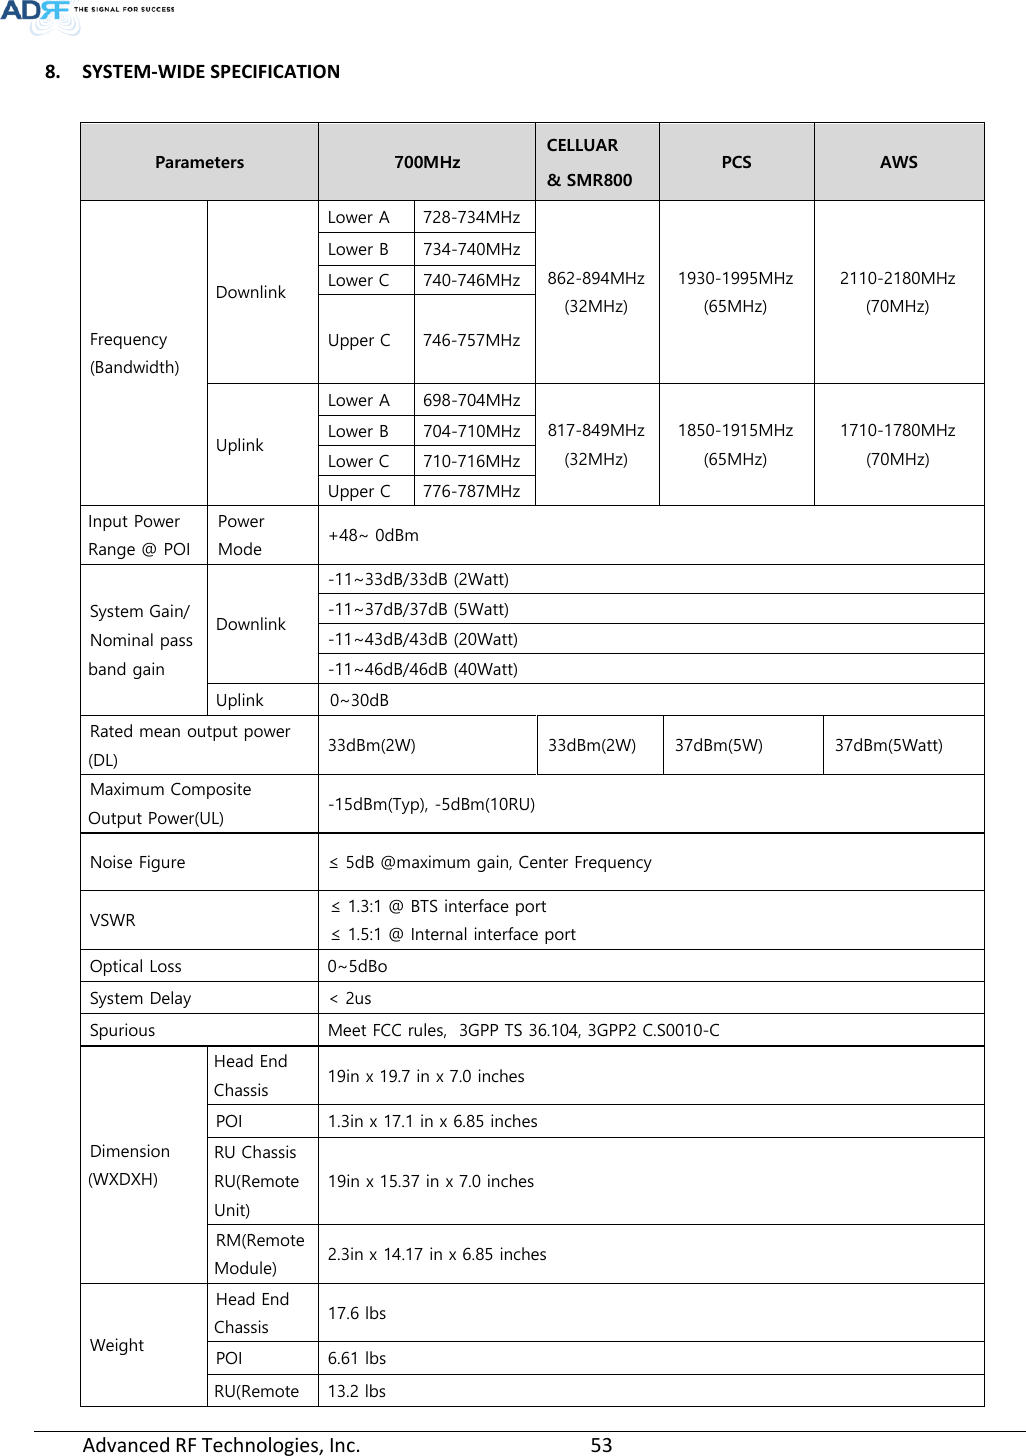 Page 53 of ADRF KOREA ADXV DAS(Distributed Antenna System) User Manual ADXV DAS